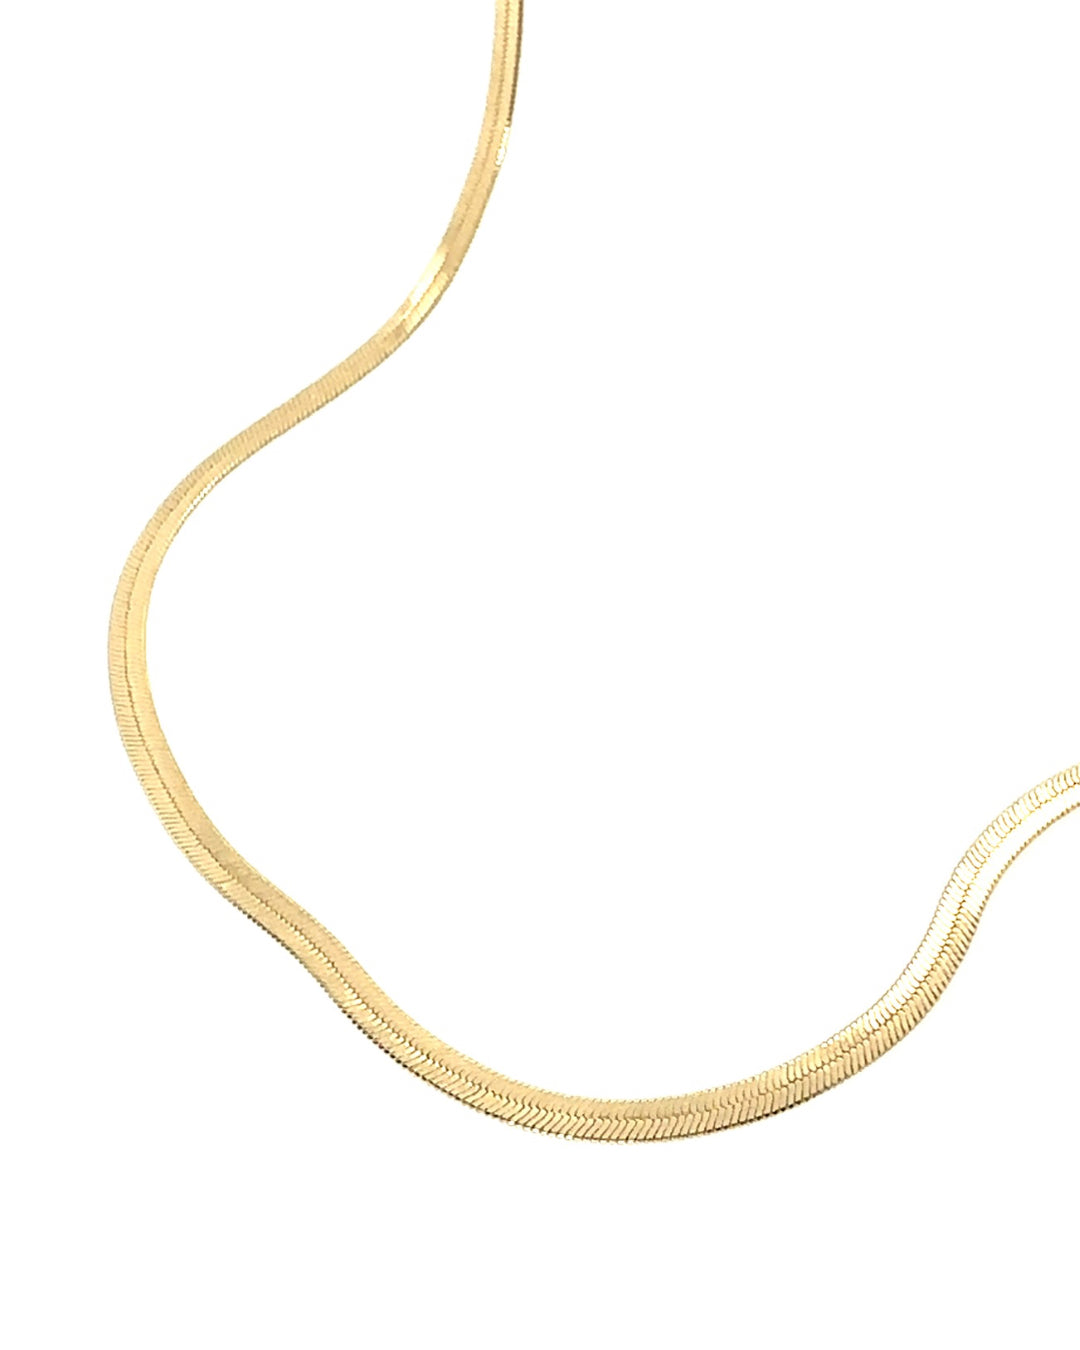 Gold Serpentine Herringbone Necklace Choker